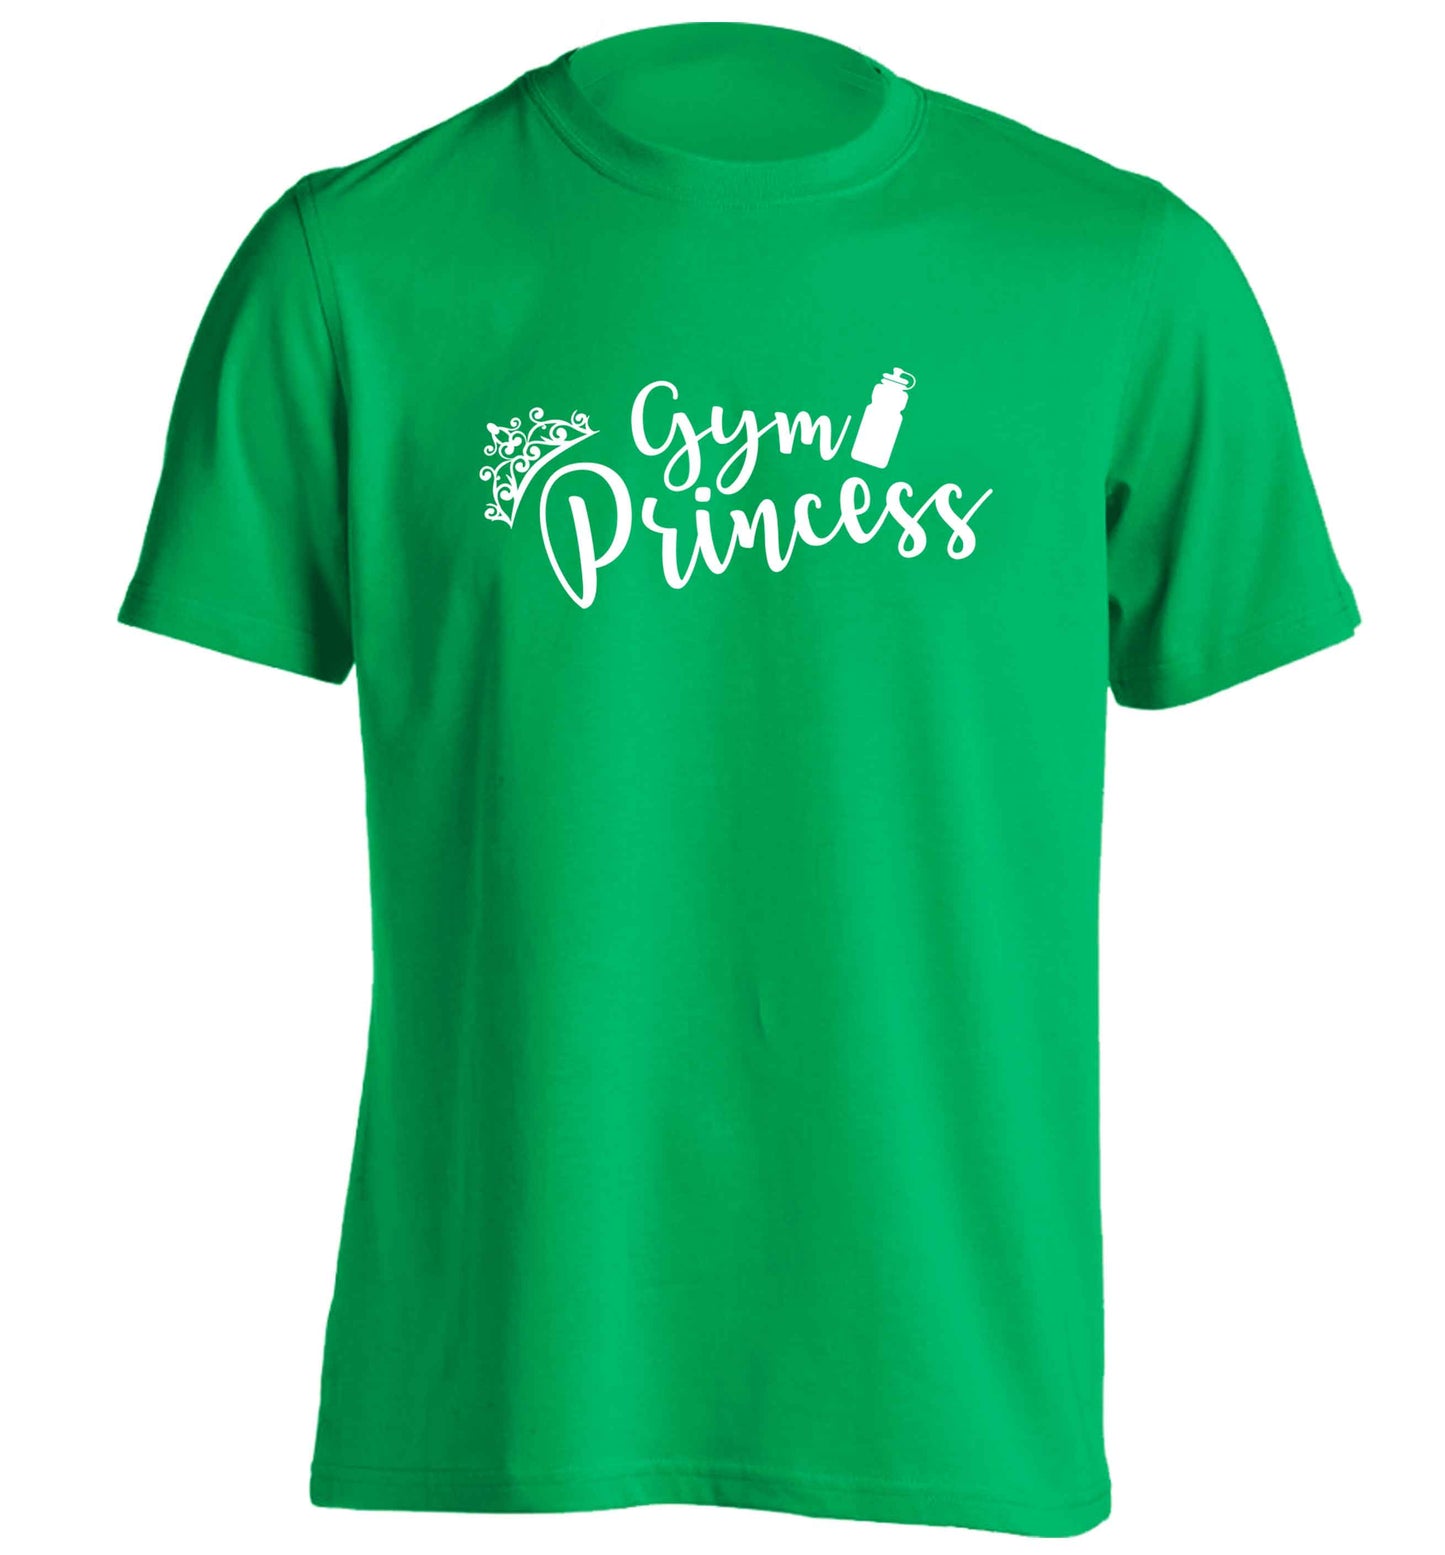 Gym princess adults unisex green Tshirt 2XL